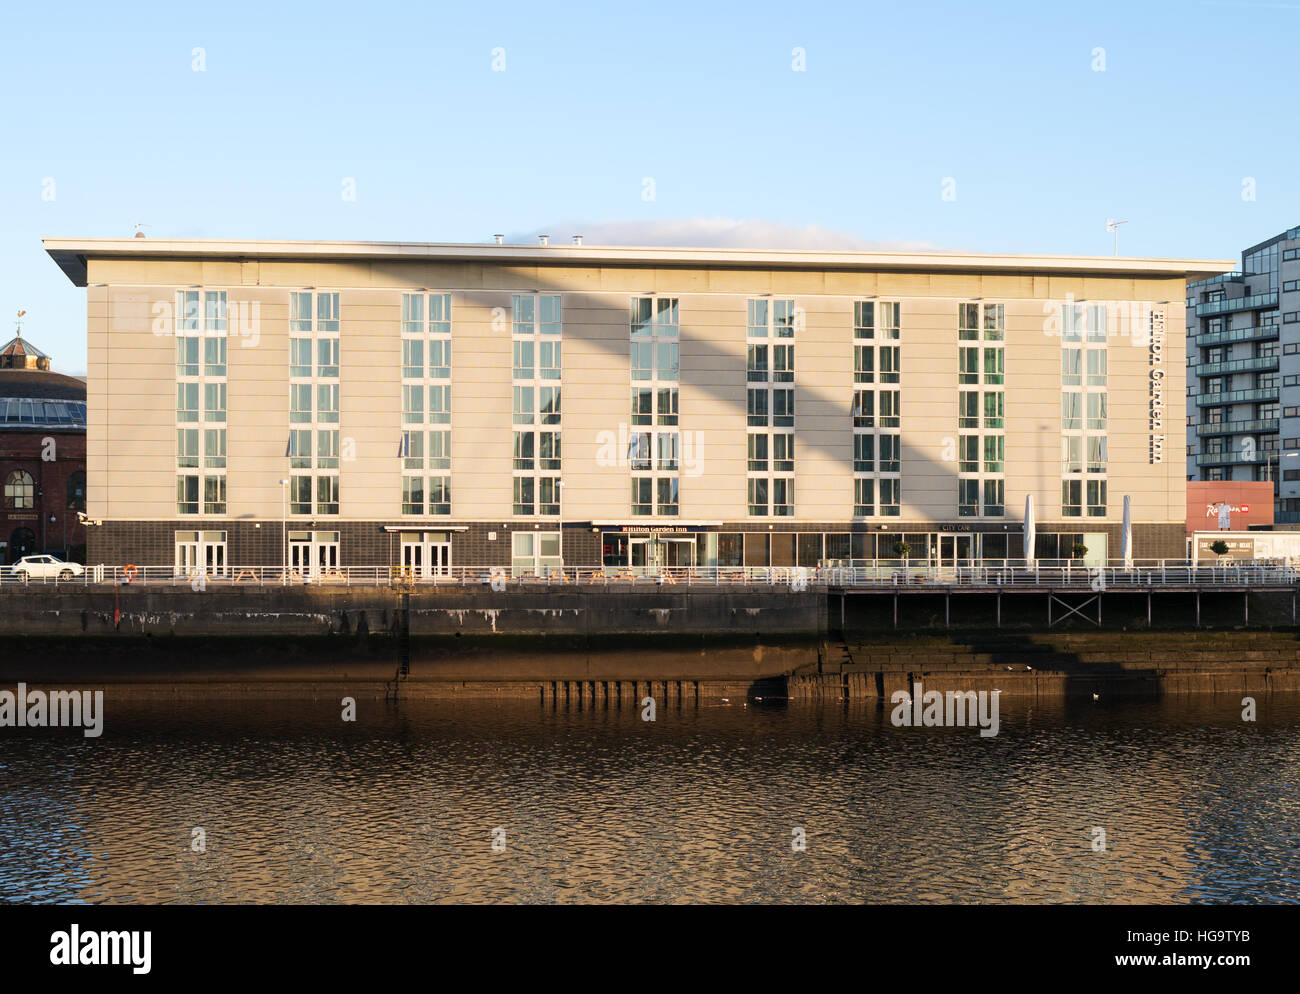 Hilton Garden Inn Hotels, Glasgow, Scotland, UK Stockfoto